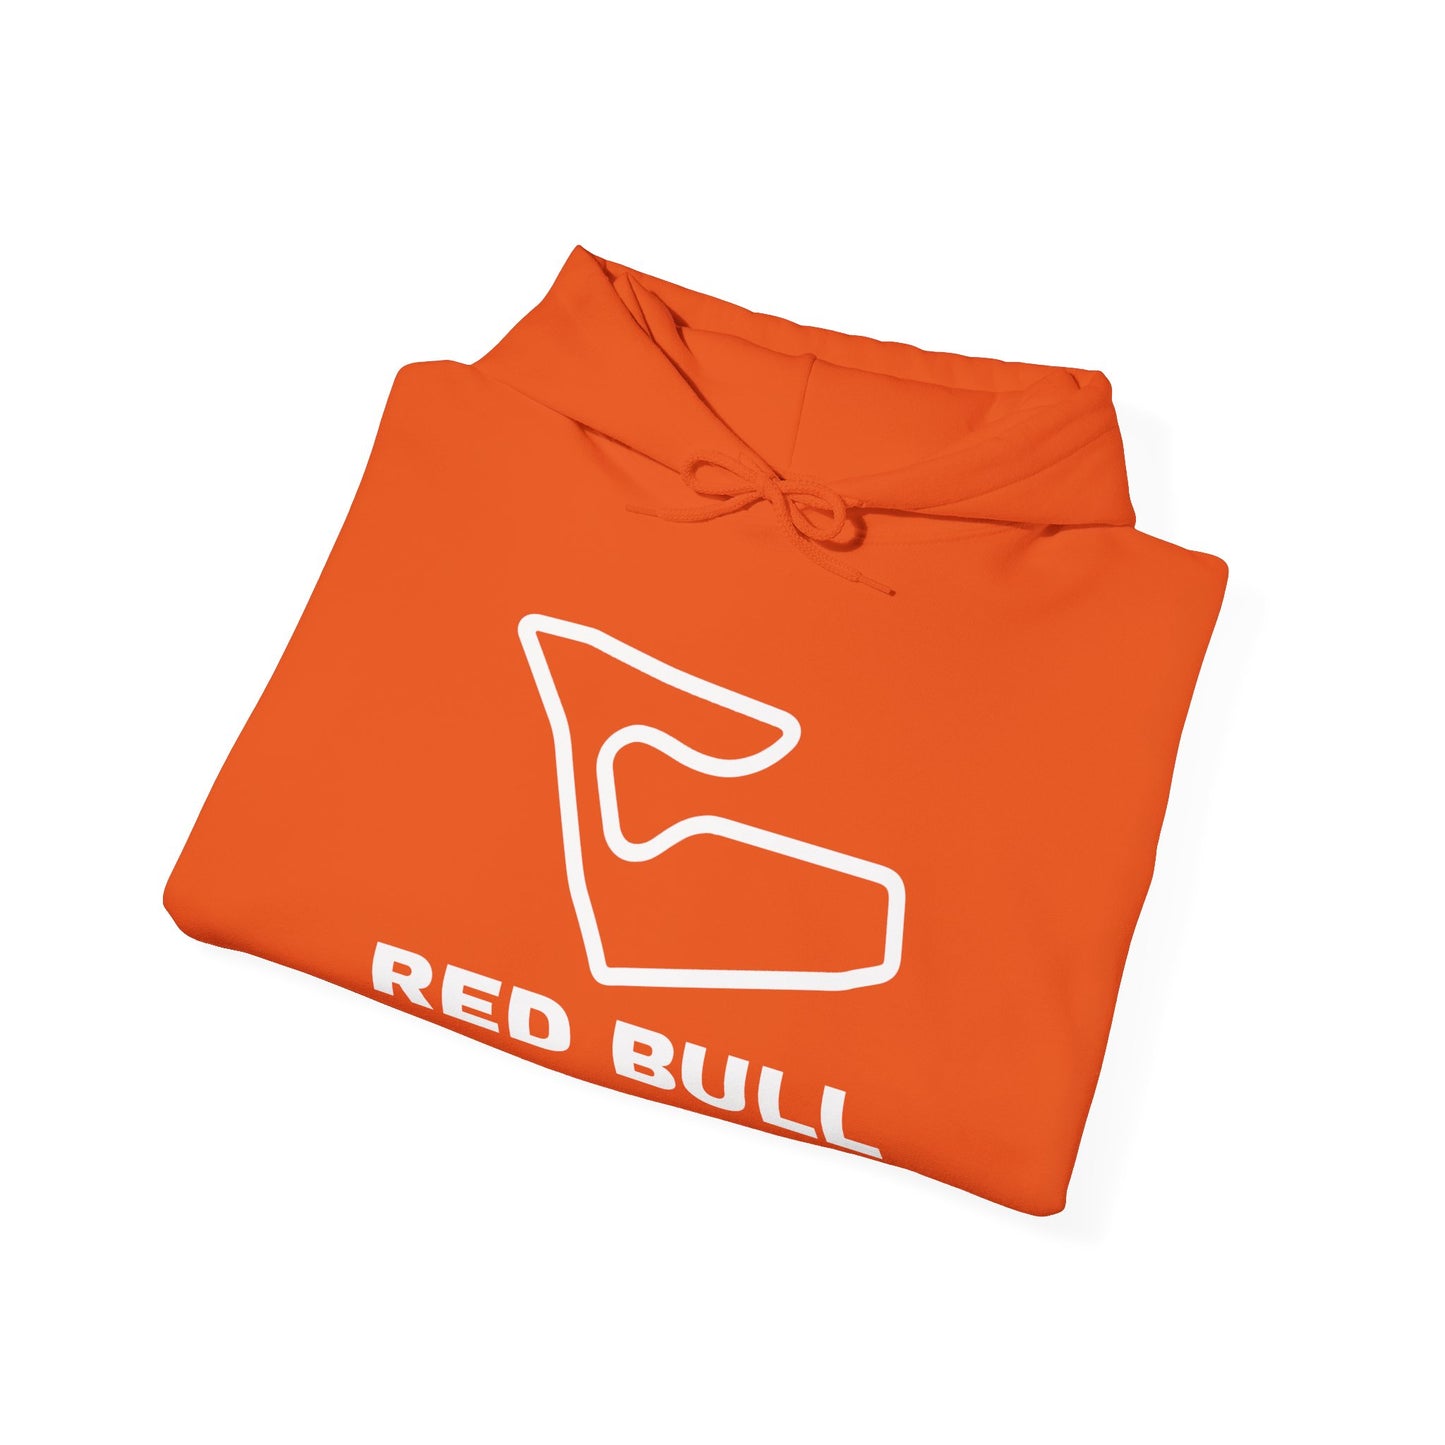 Unisex Red Bull Ring Track Hoodie